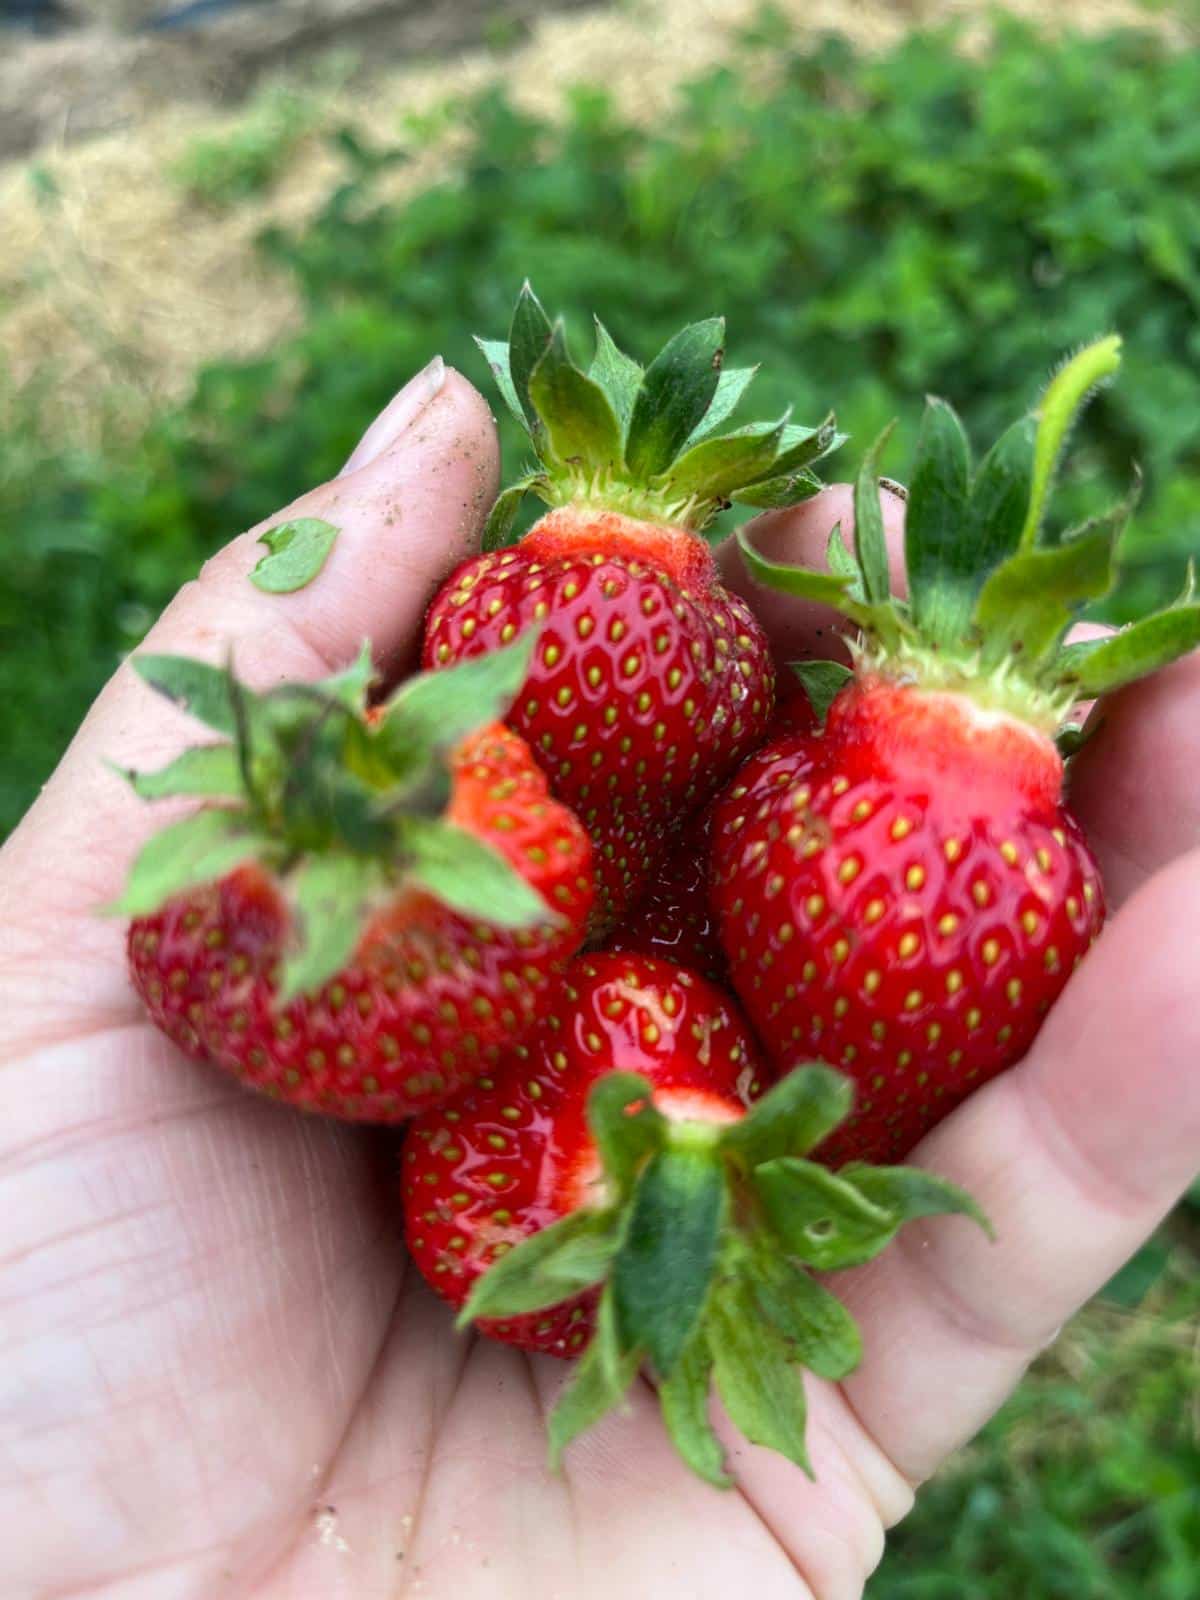 Large, fresh strawberries